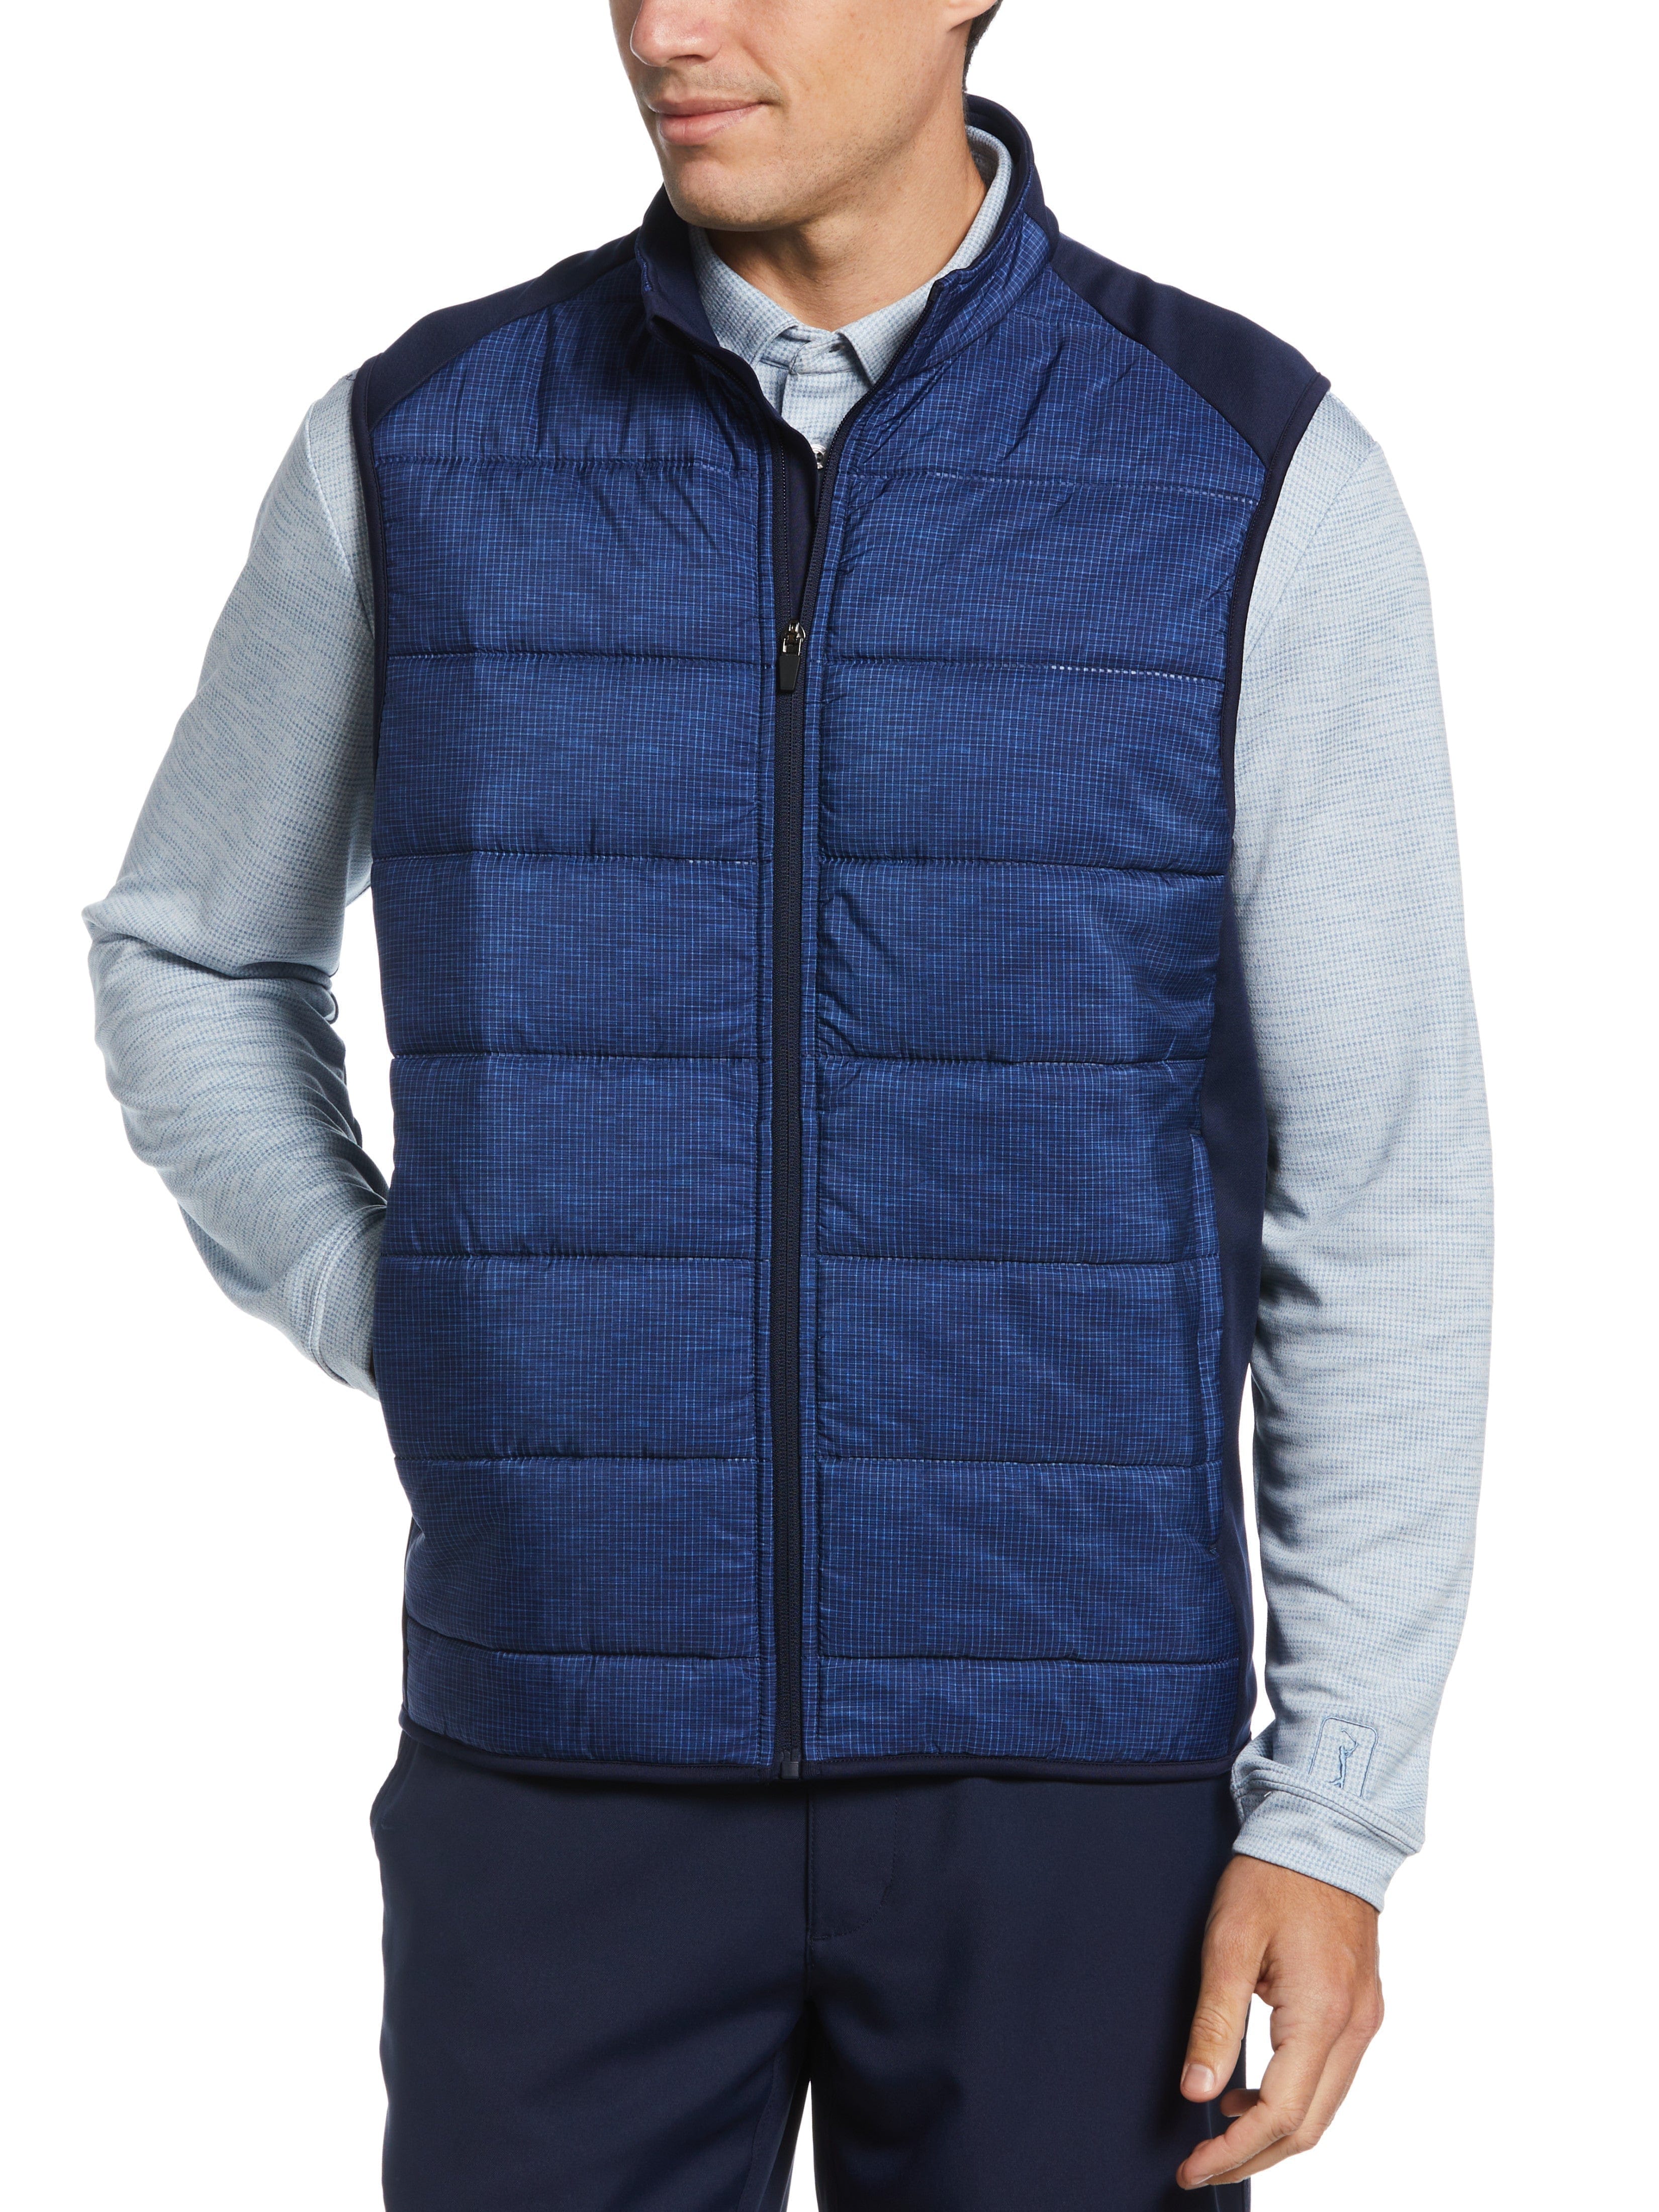 PGA TOUR Apparel Mens Ultrasonic Print Full Zip Golf Vest Jacket Top, Size 2XL, Navy Blue, 100% Polyester | Golf Apparel Shop